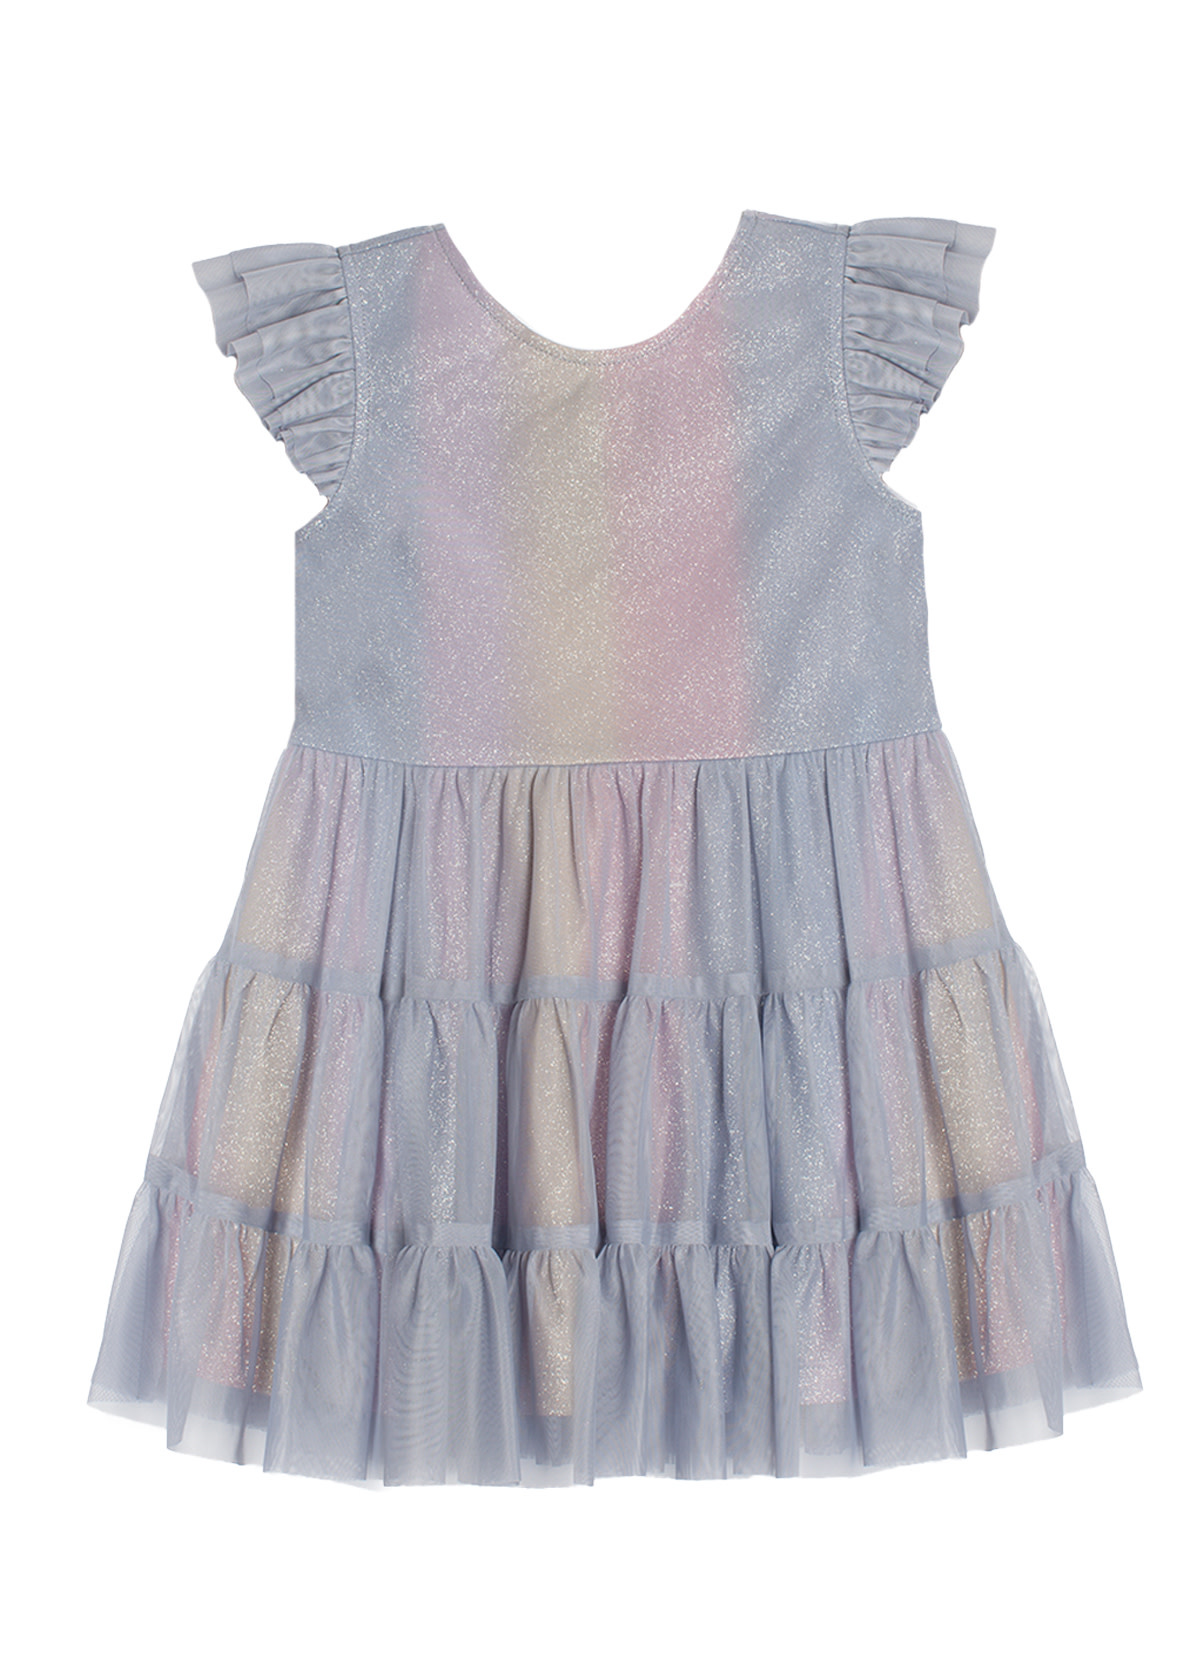 Isobella & Chloe Phoenix Tiered Soft Tulle & Sparkling LS Knit Dress